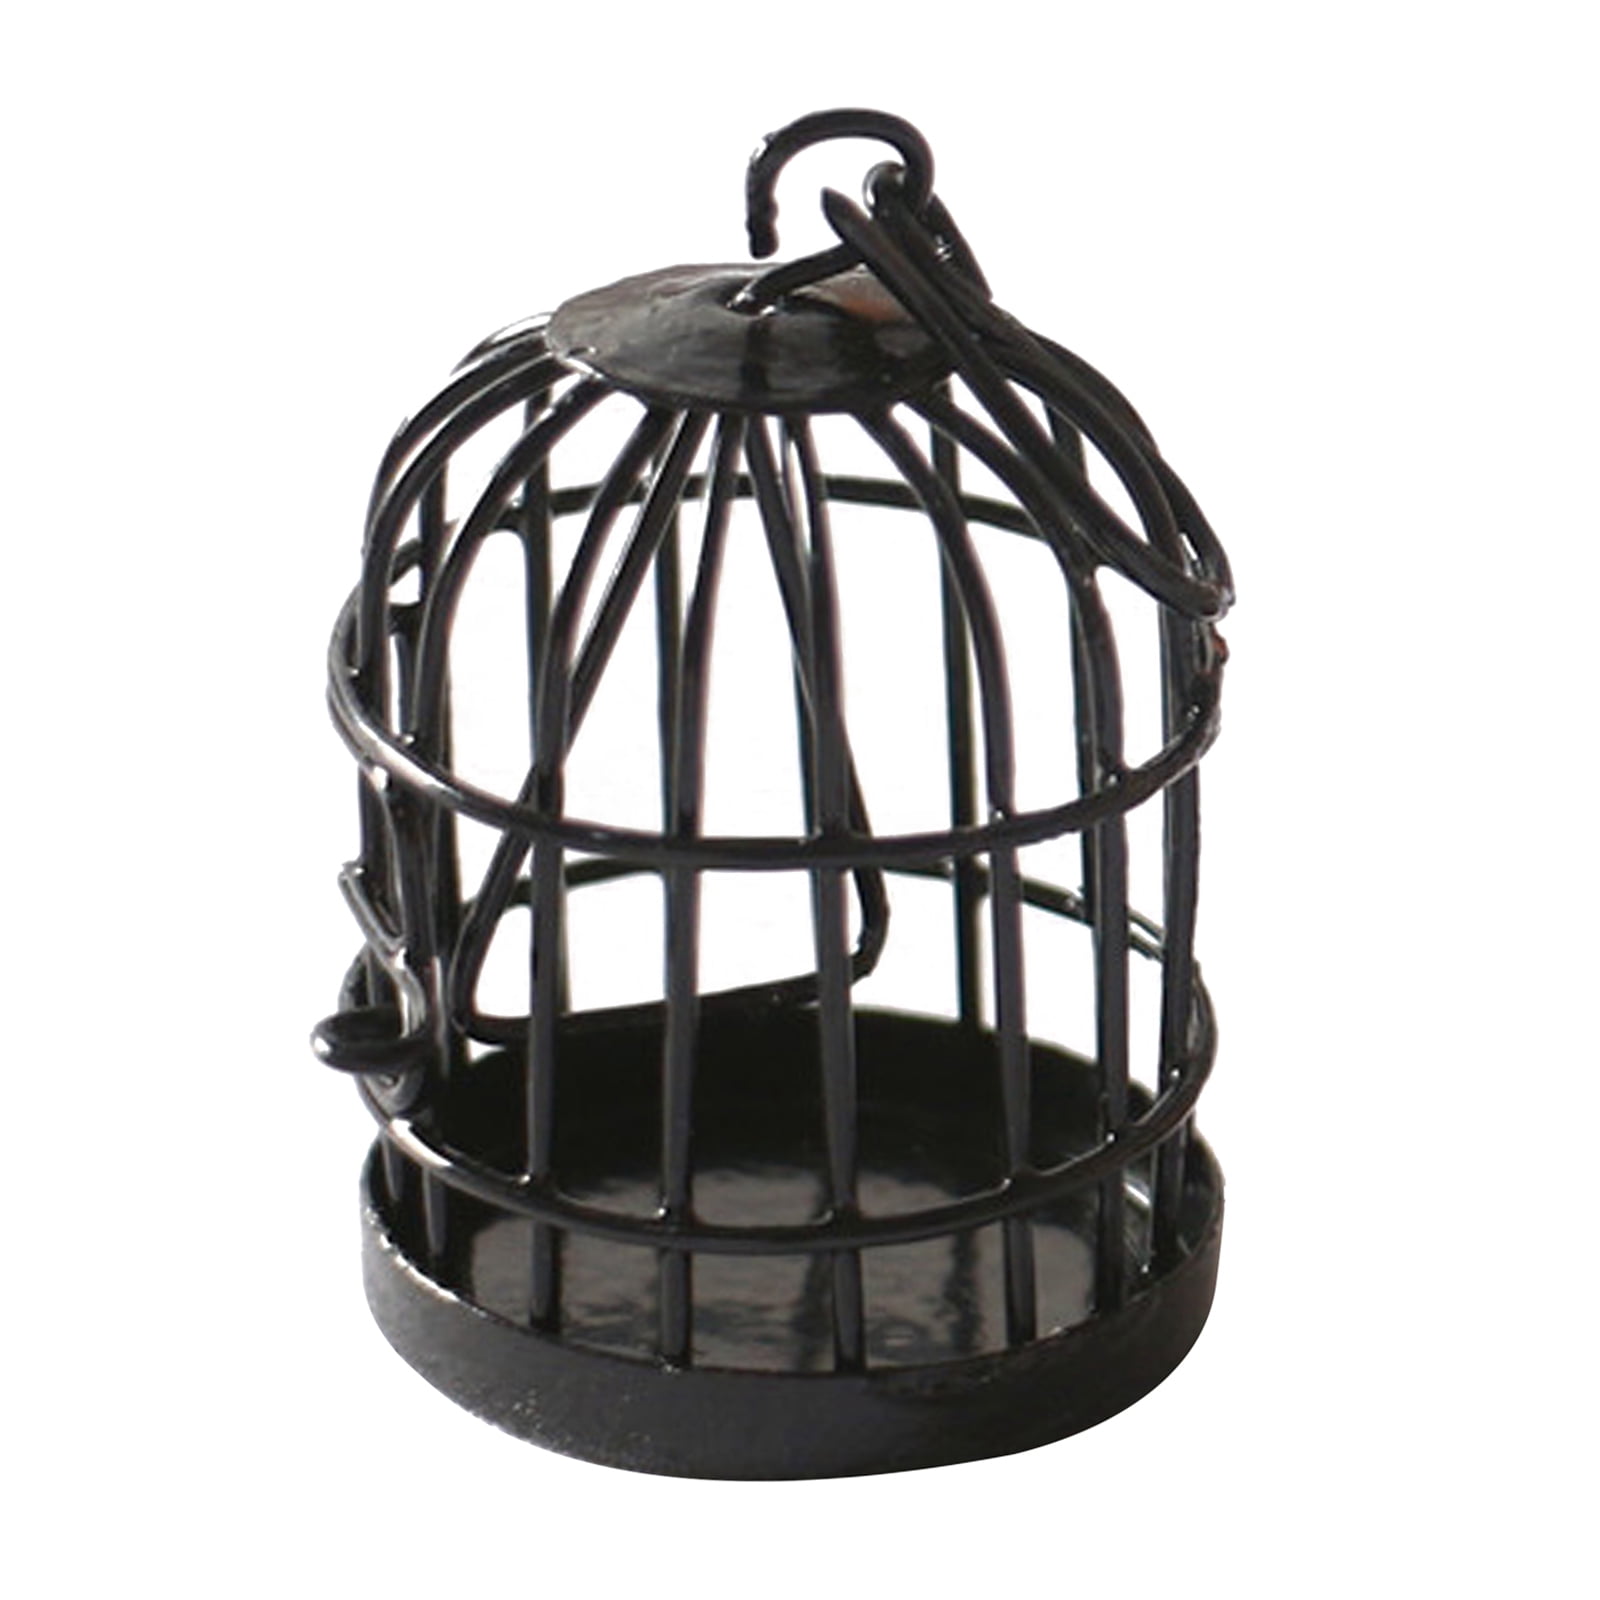 1:12 Dollhouse miniature furniture metal bird cage for dollhouse decor ^P LP 